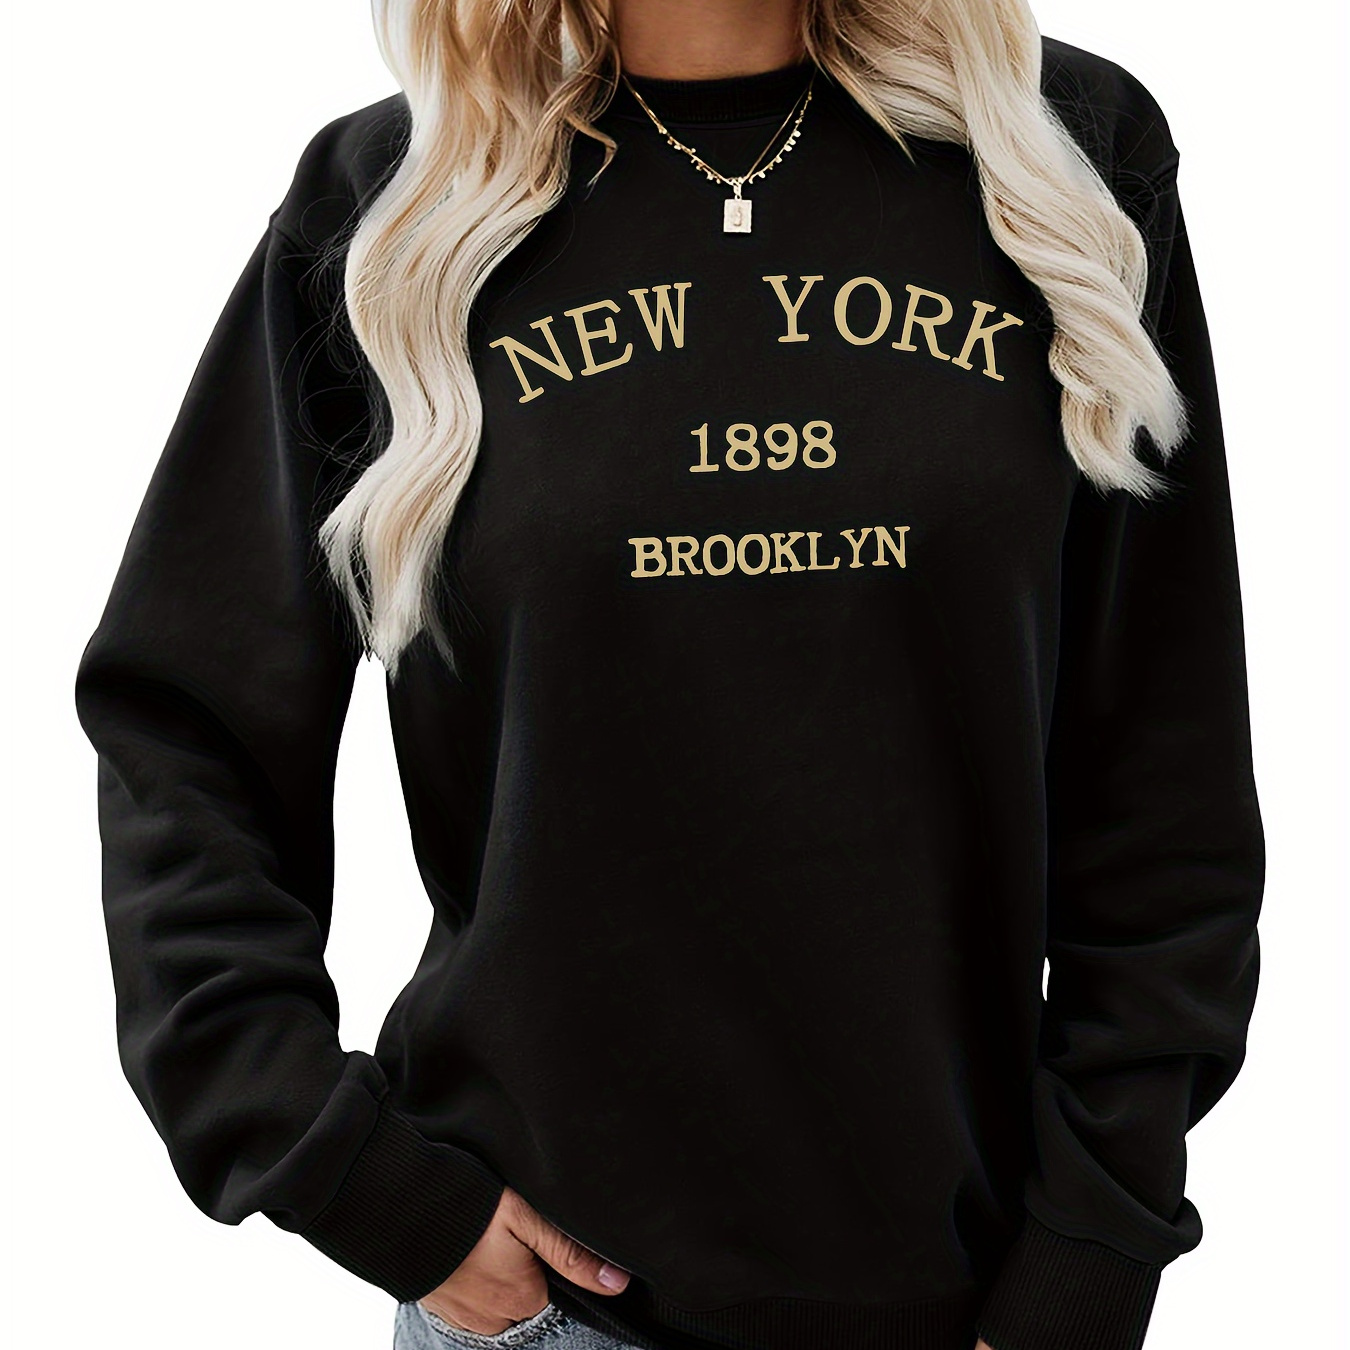 

New York Letter Print Sweatshirt, Casual Crew Neck Long Sleeve Sweatshirt, Women's Clothing